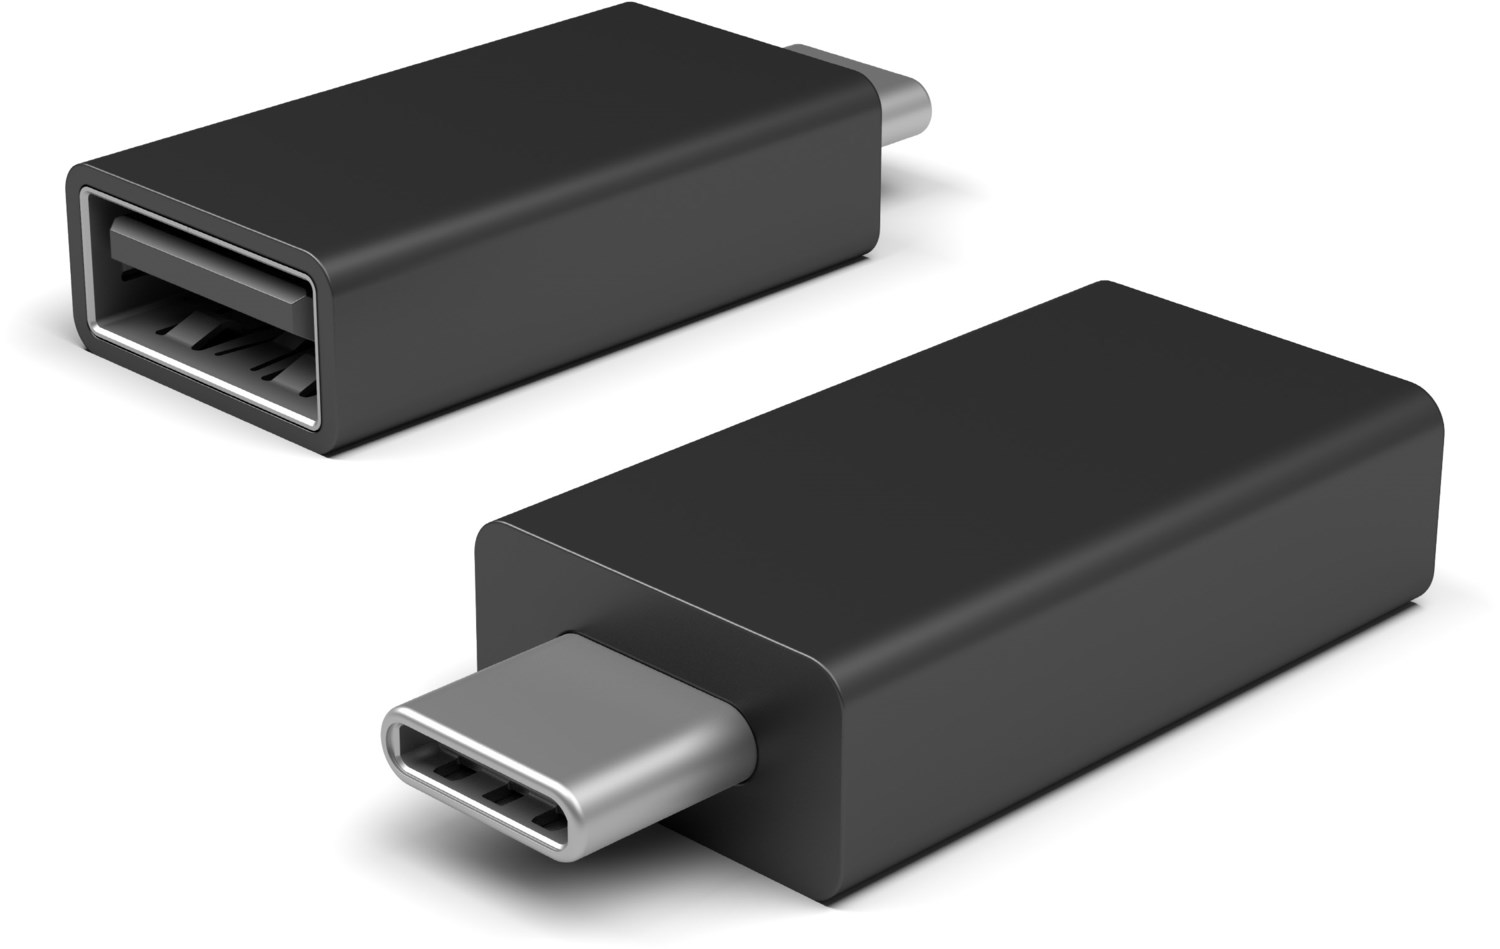 Surface USB-C > USB 3.0 Adapter